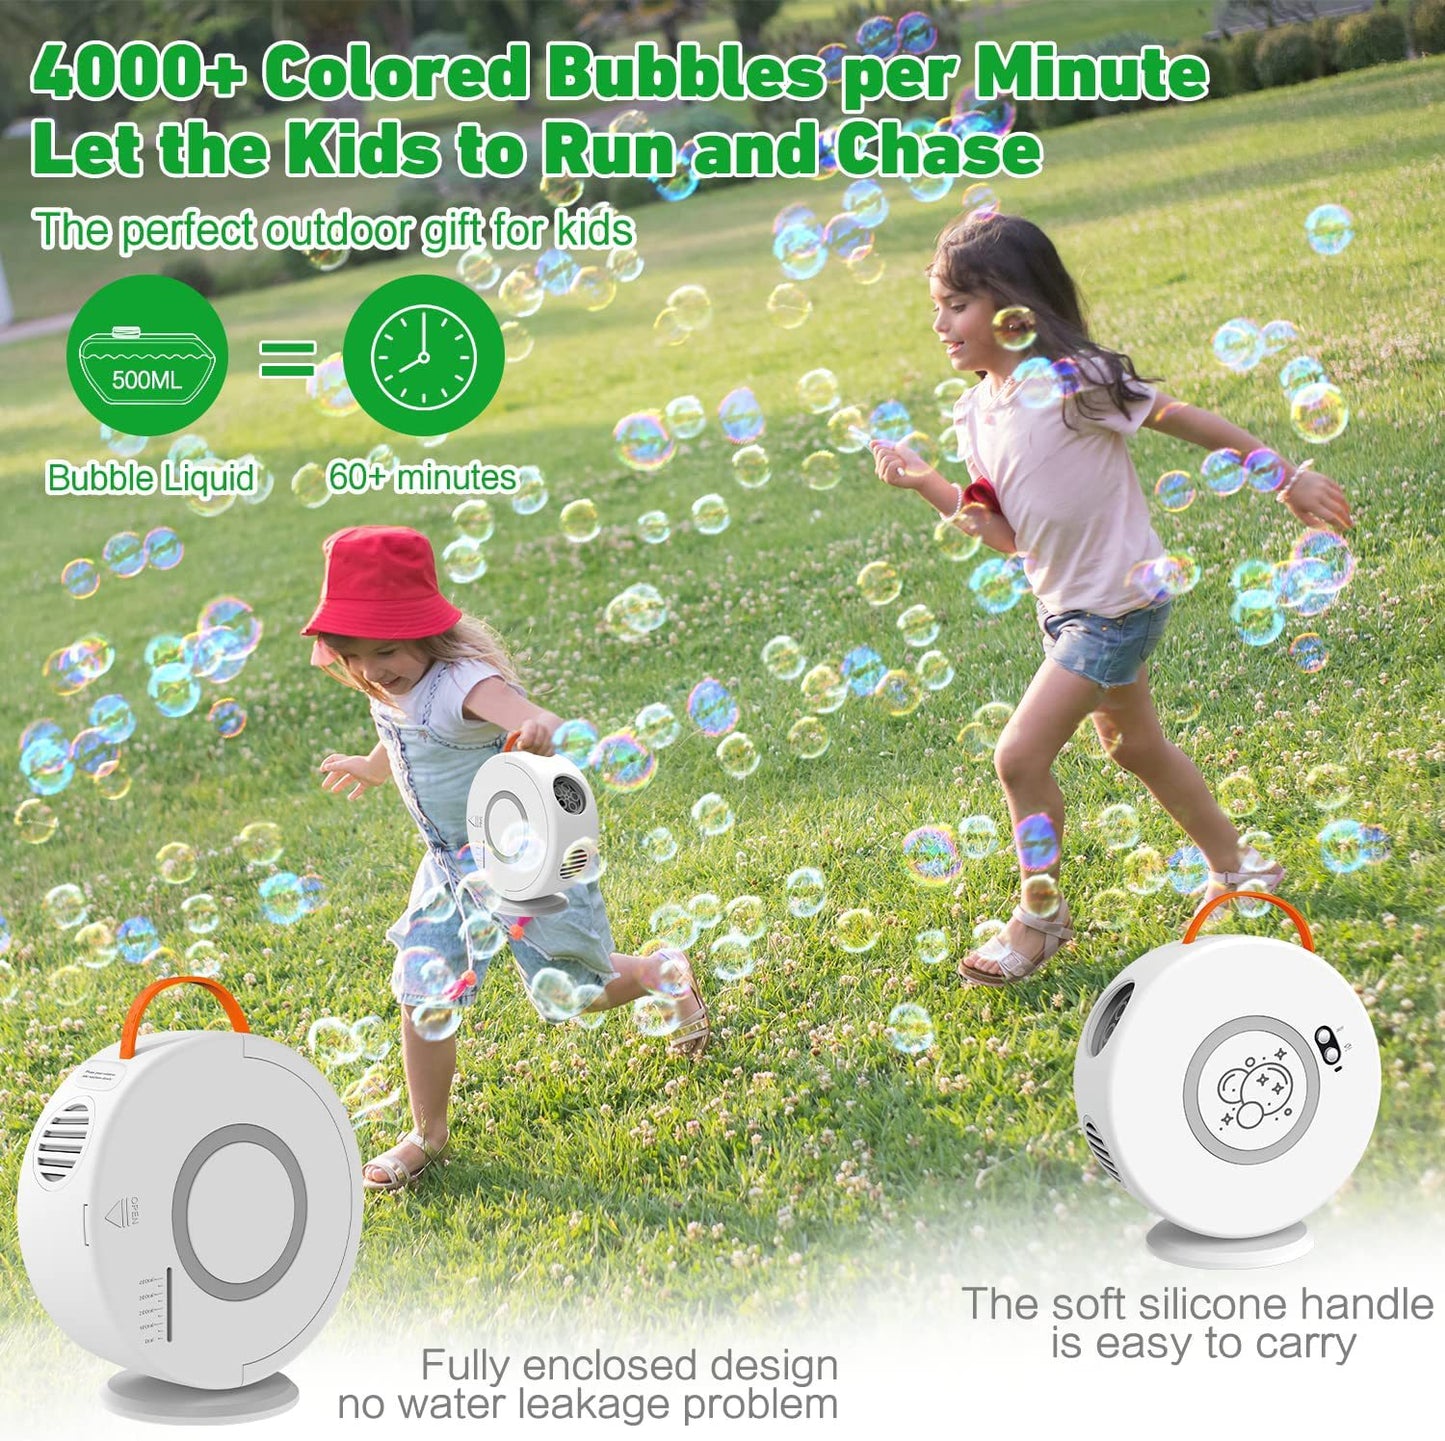 Rechargeable Bubble Machine: Endless Bubbles for Kids' Outdoor Fun